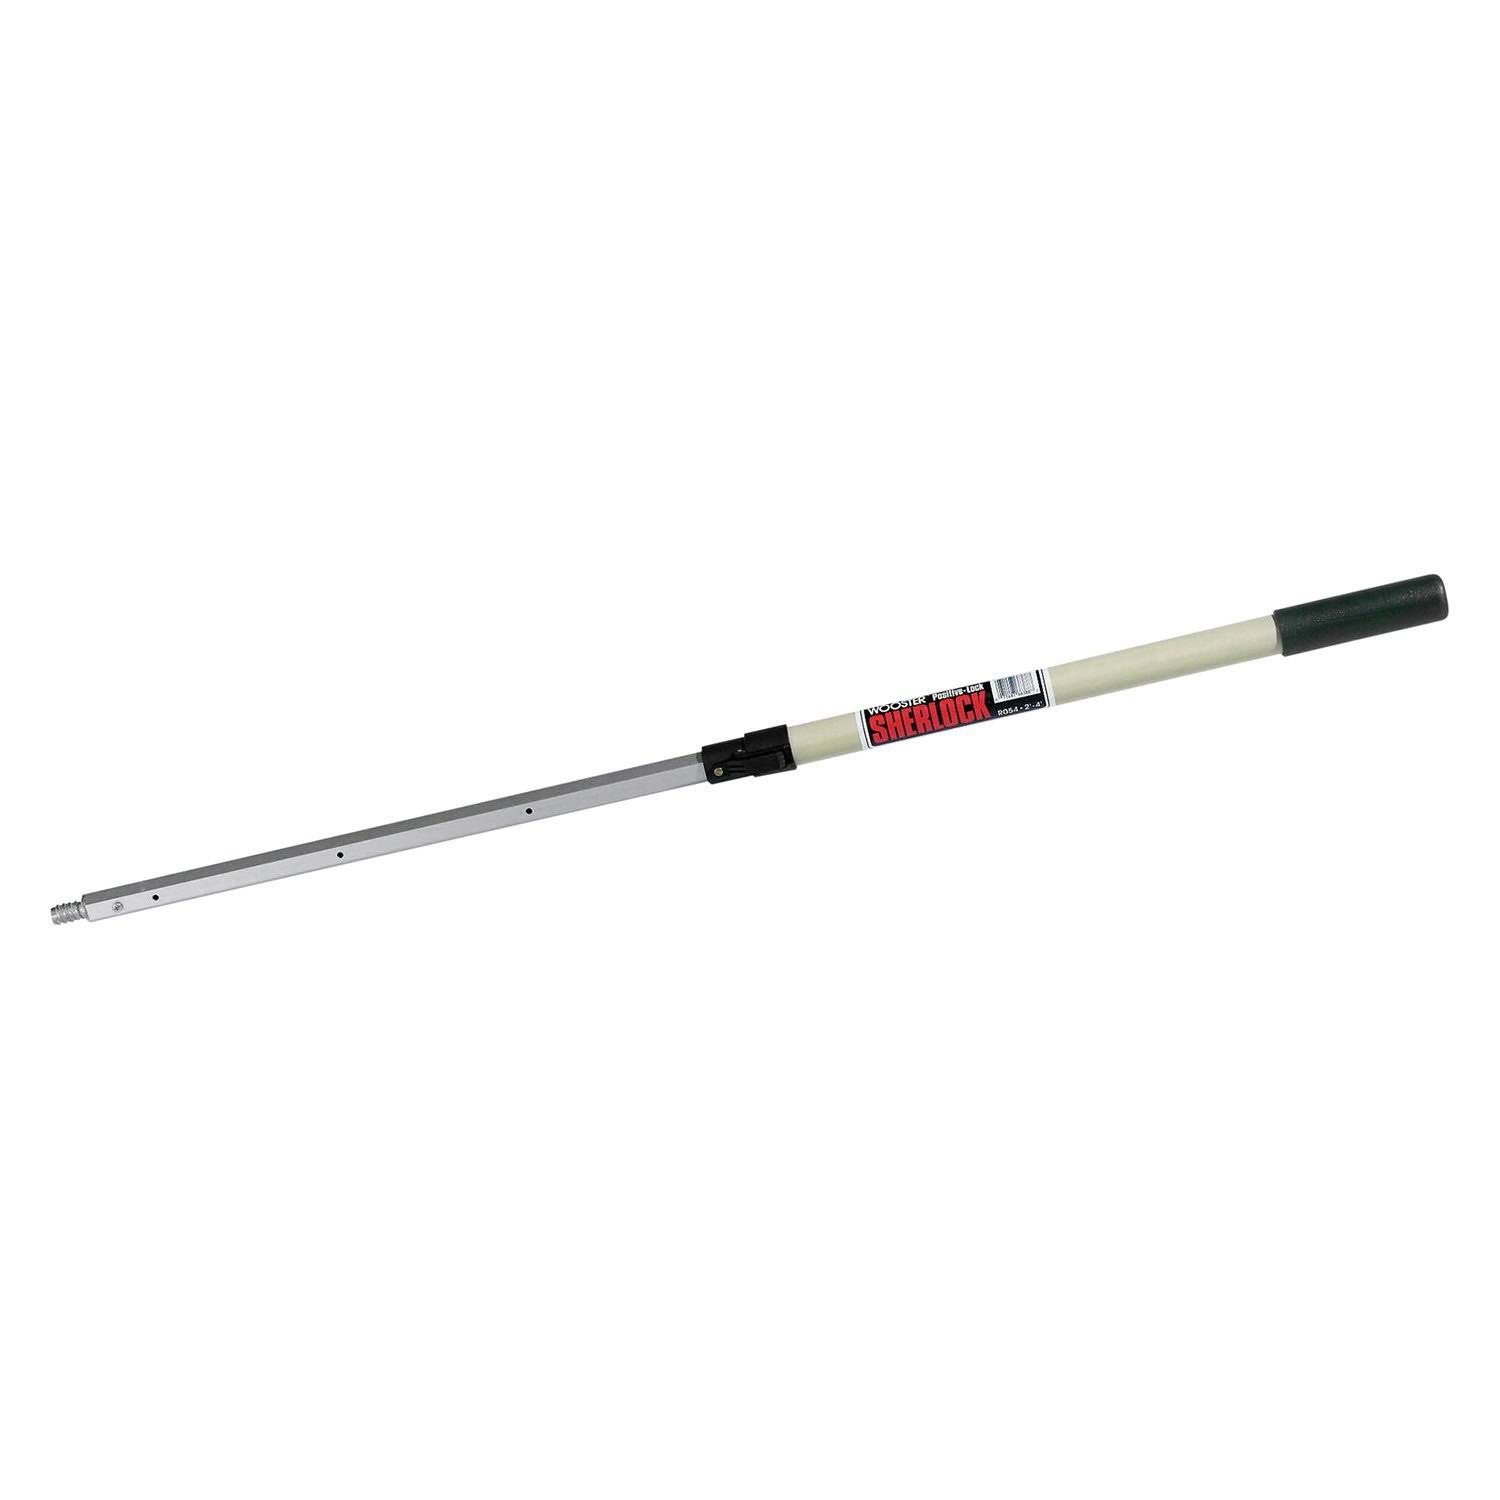 Wooster Brush Sr055 Sherlock Extension Pole, 4-8 Feet